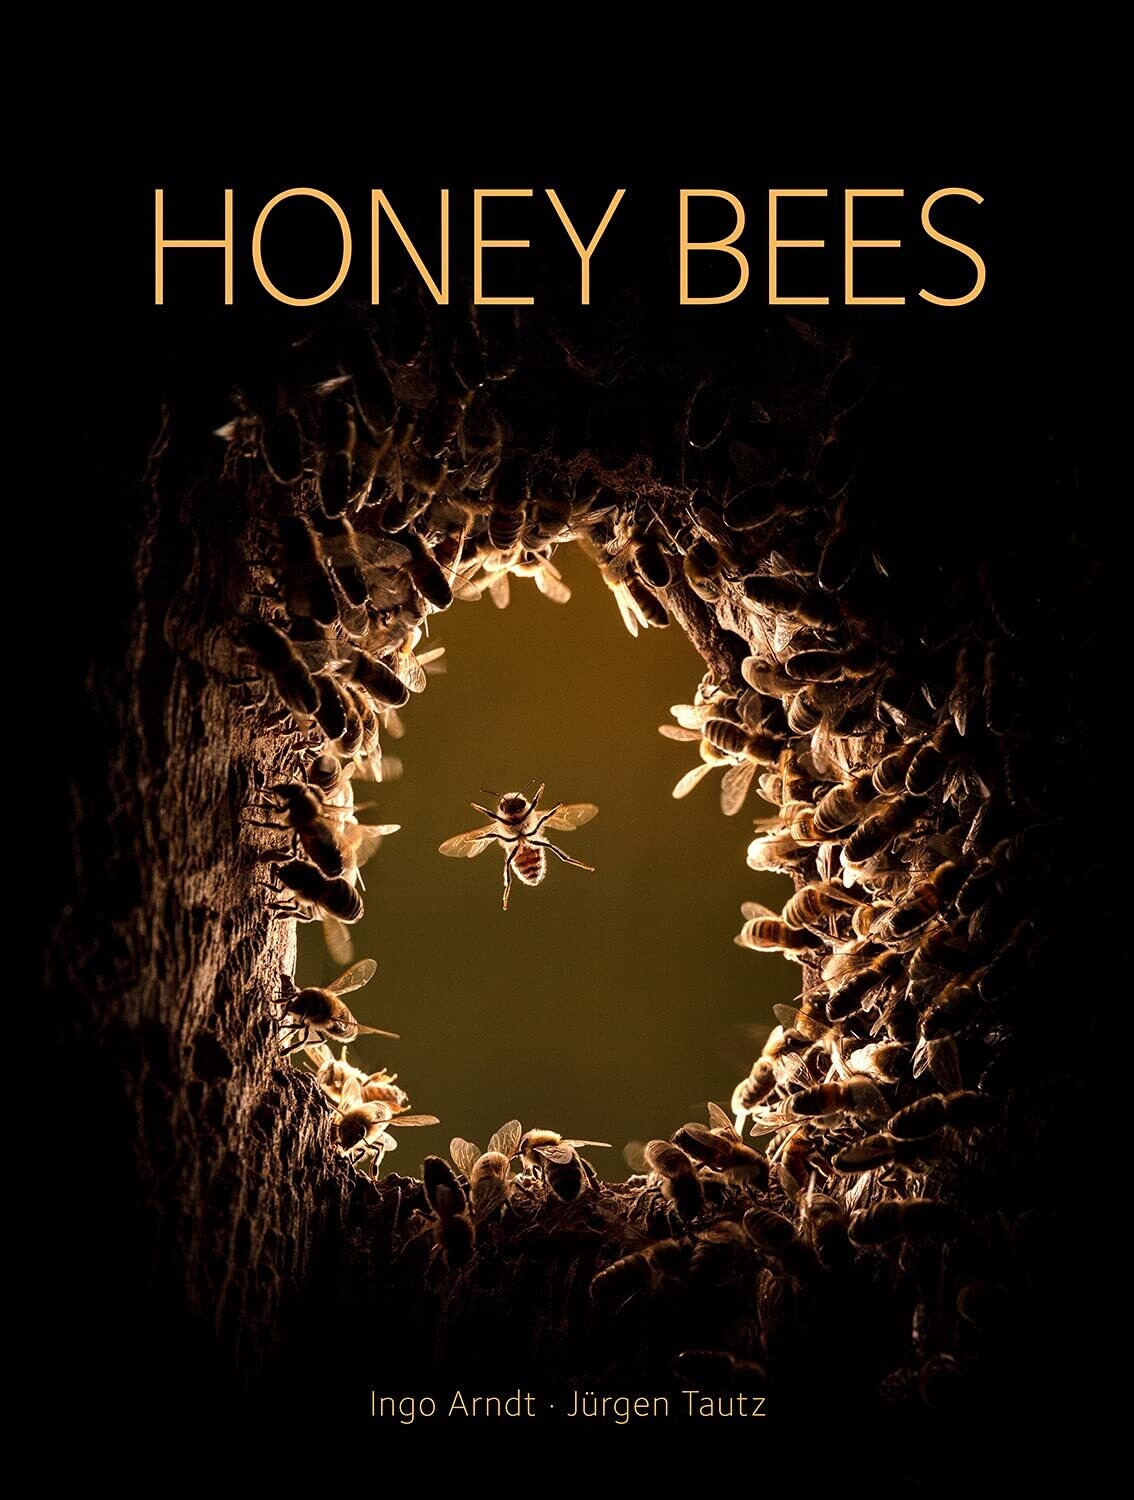 Wild Honey Bees - An Intimate Portrait